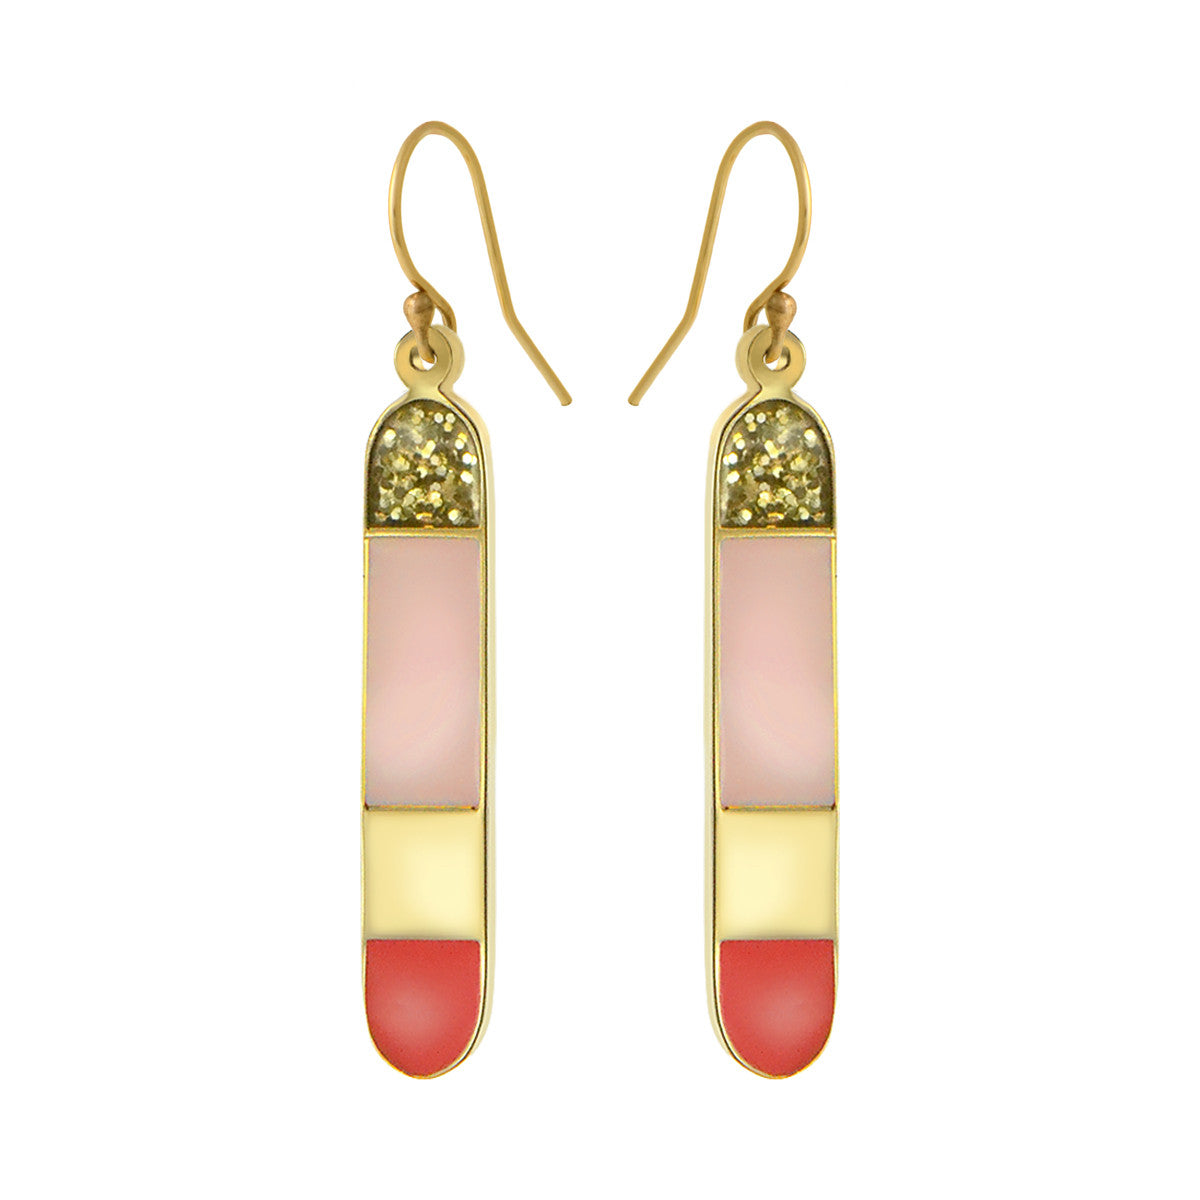 long Bliss solid colorblock earrings gold jaipur